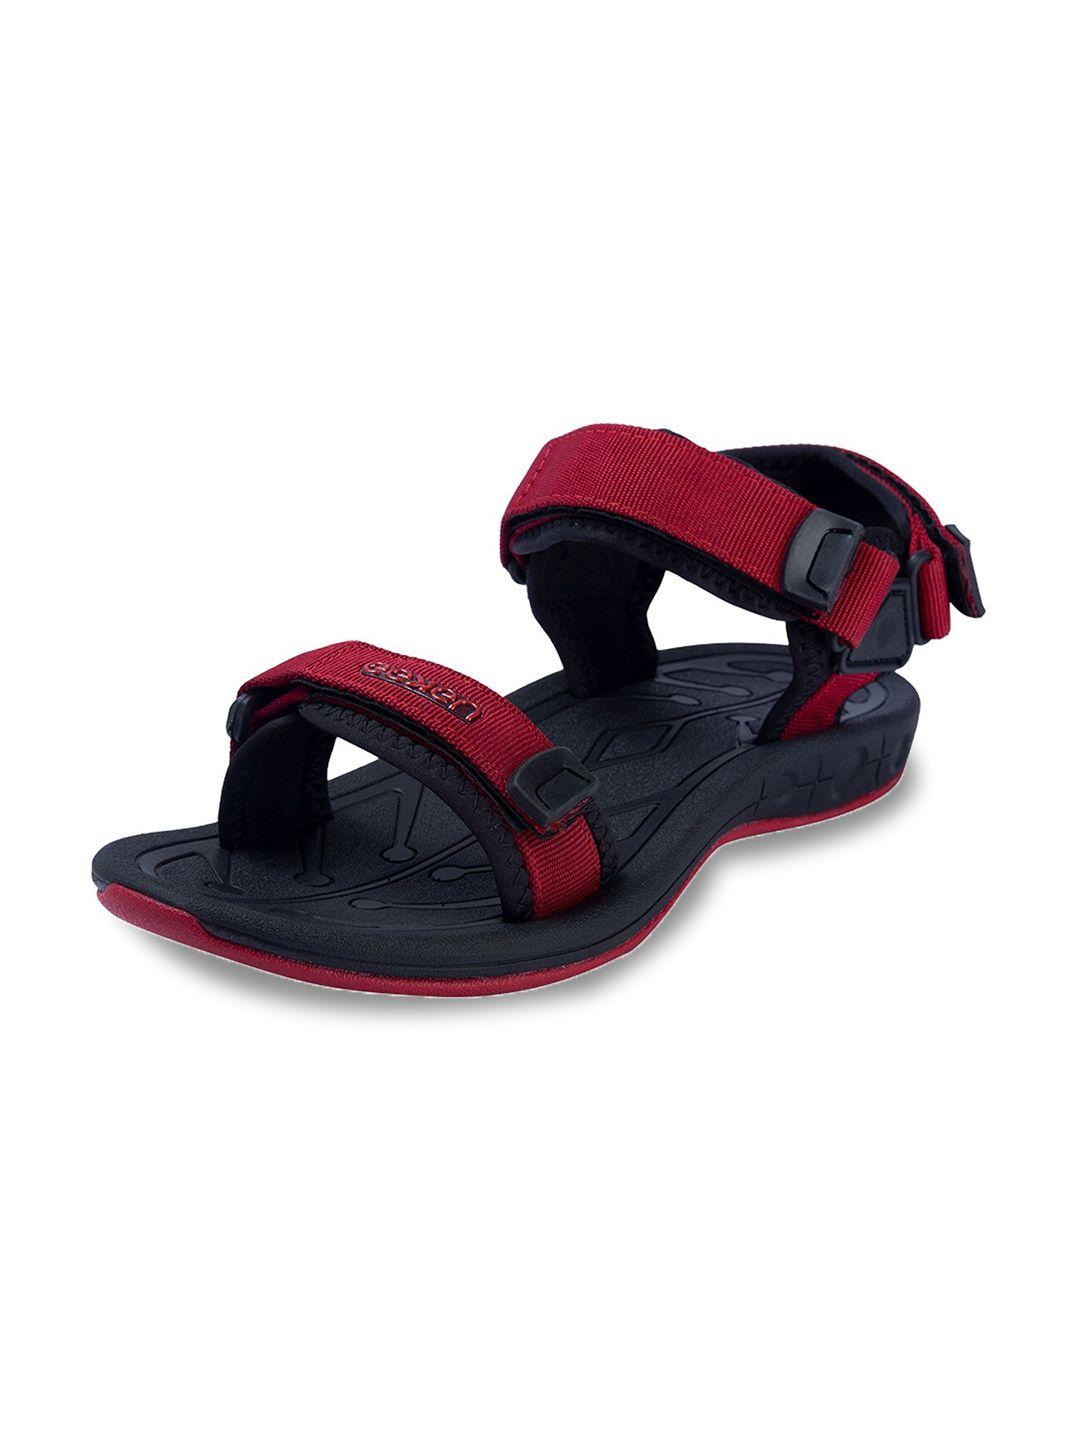 paragon-men-velcro-comfort-sandals